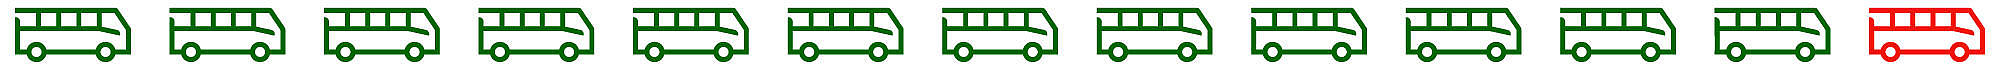 Eine Reihe an grünen Bussymbolen.